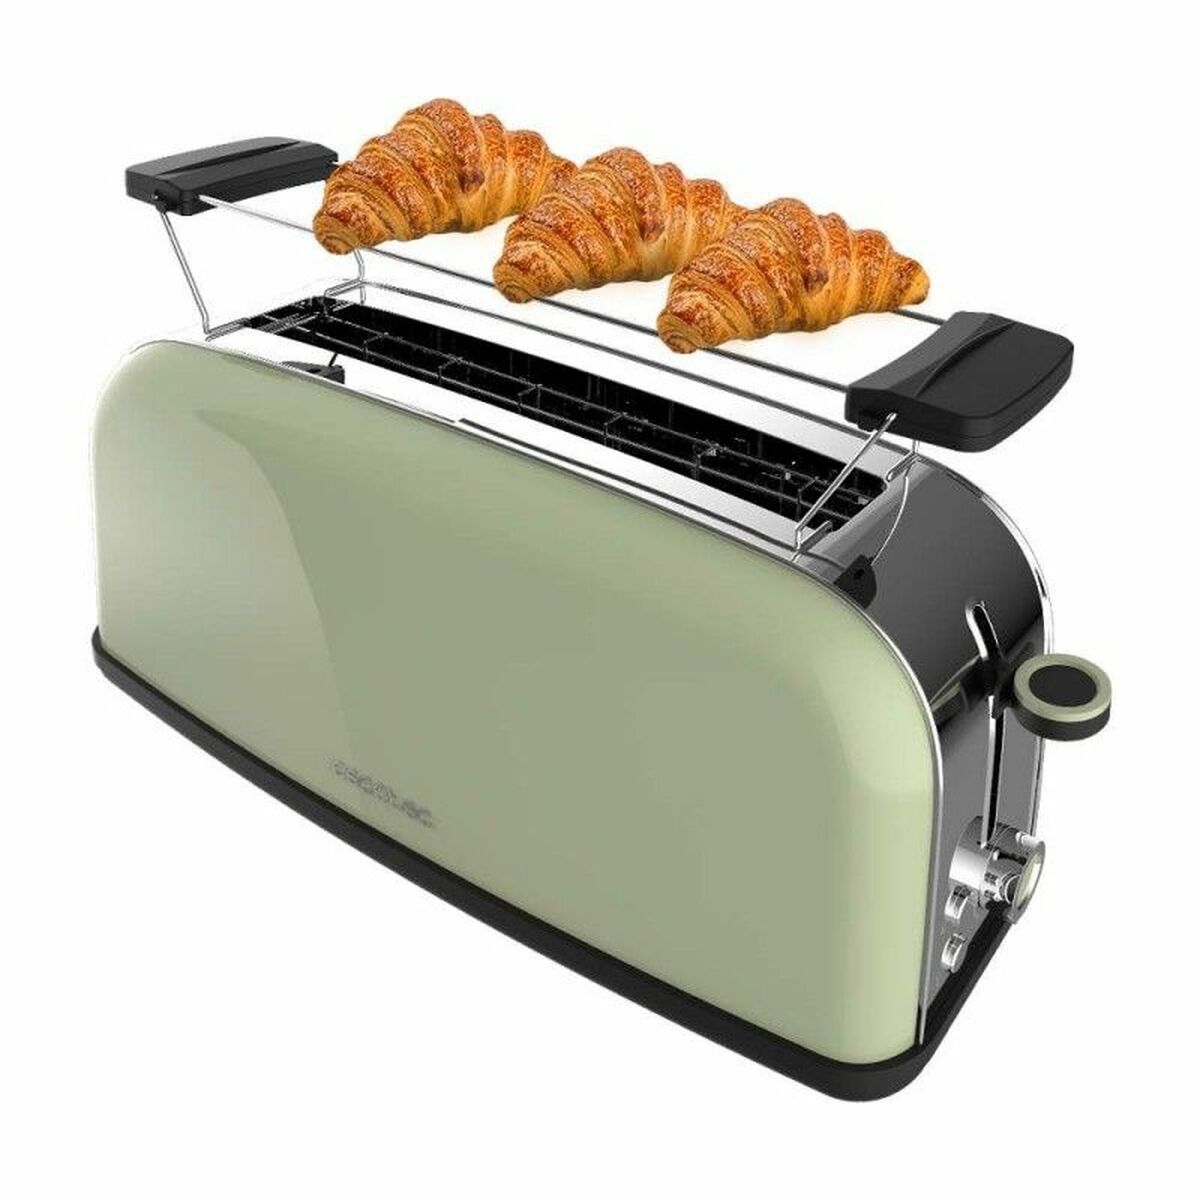 Toaster Cecotec Toastin' time 850 Long 850 W - CA International  